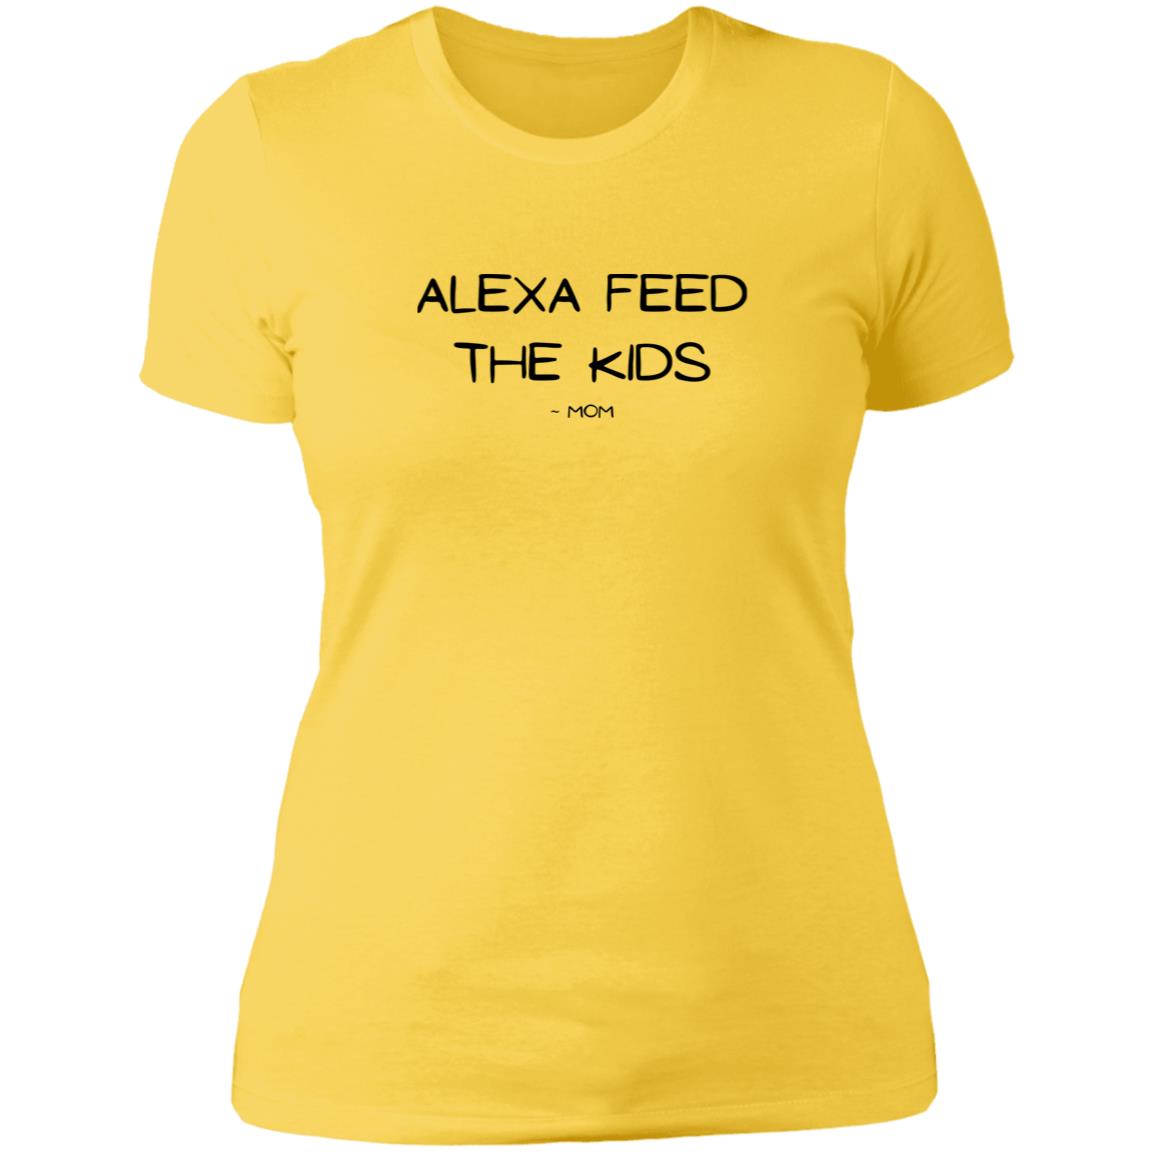 Alexa Feed the Kids - women's